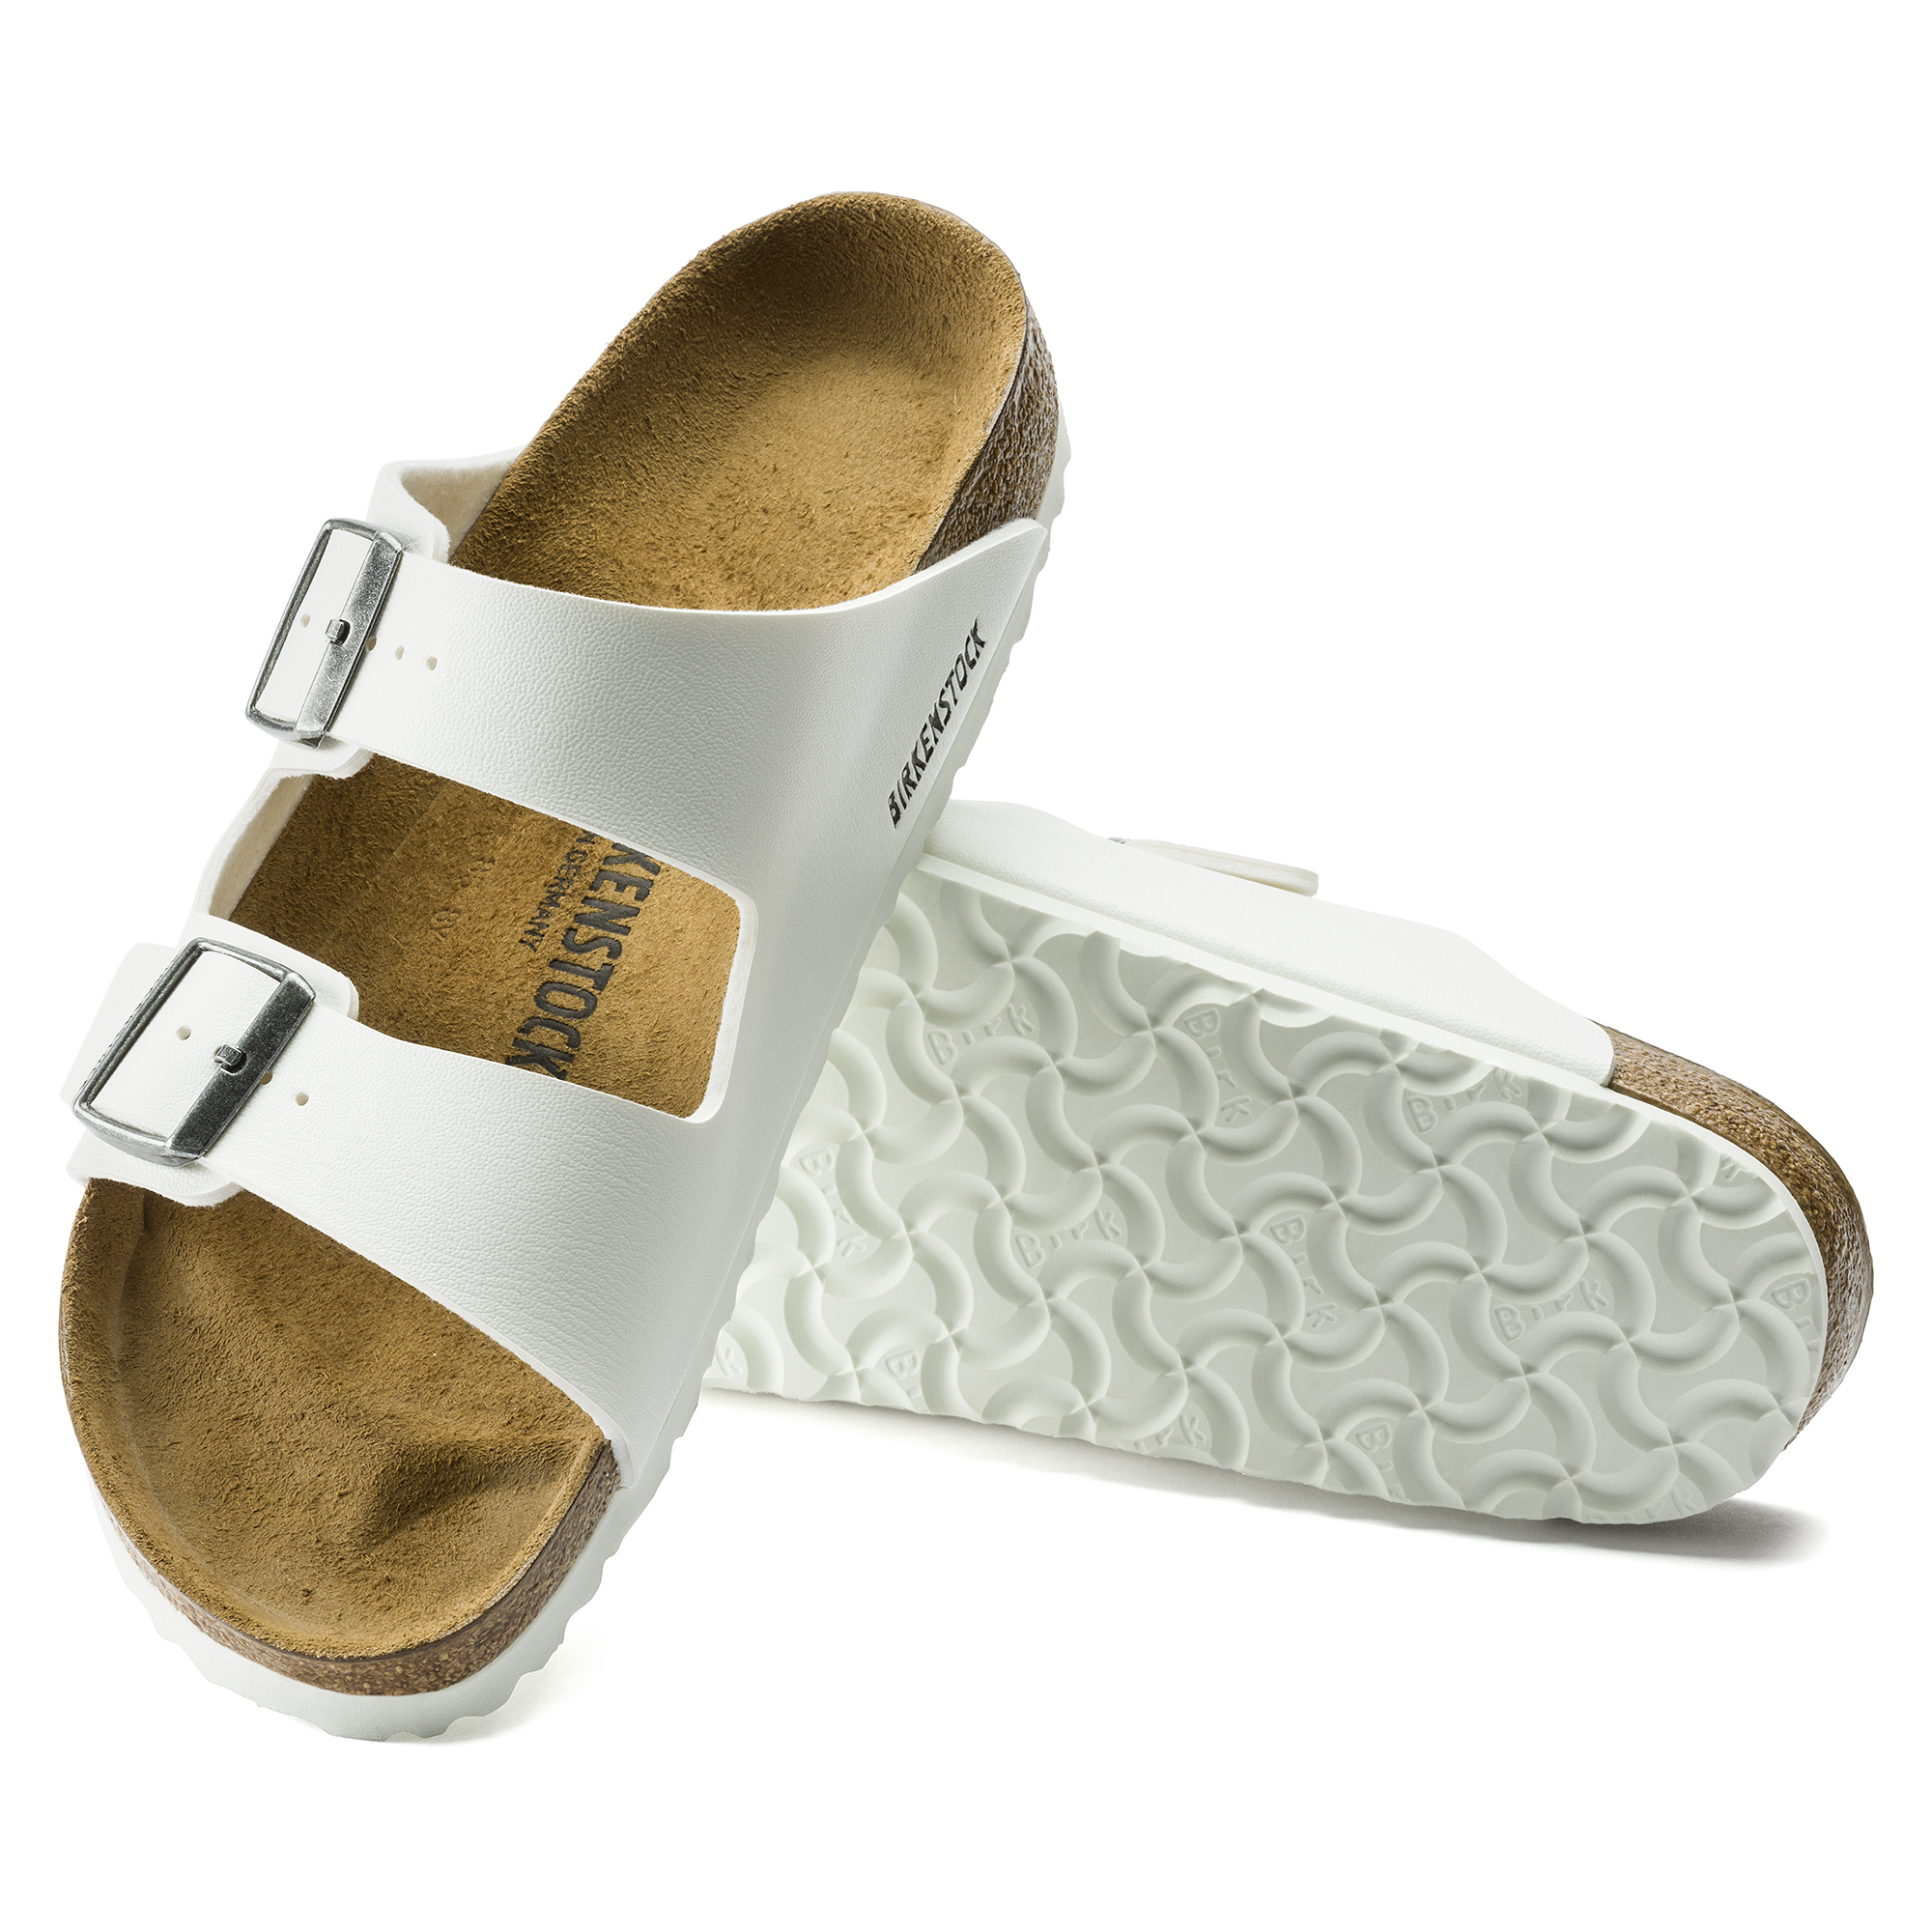 womens white birkenstock sandals